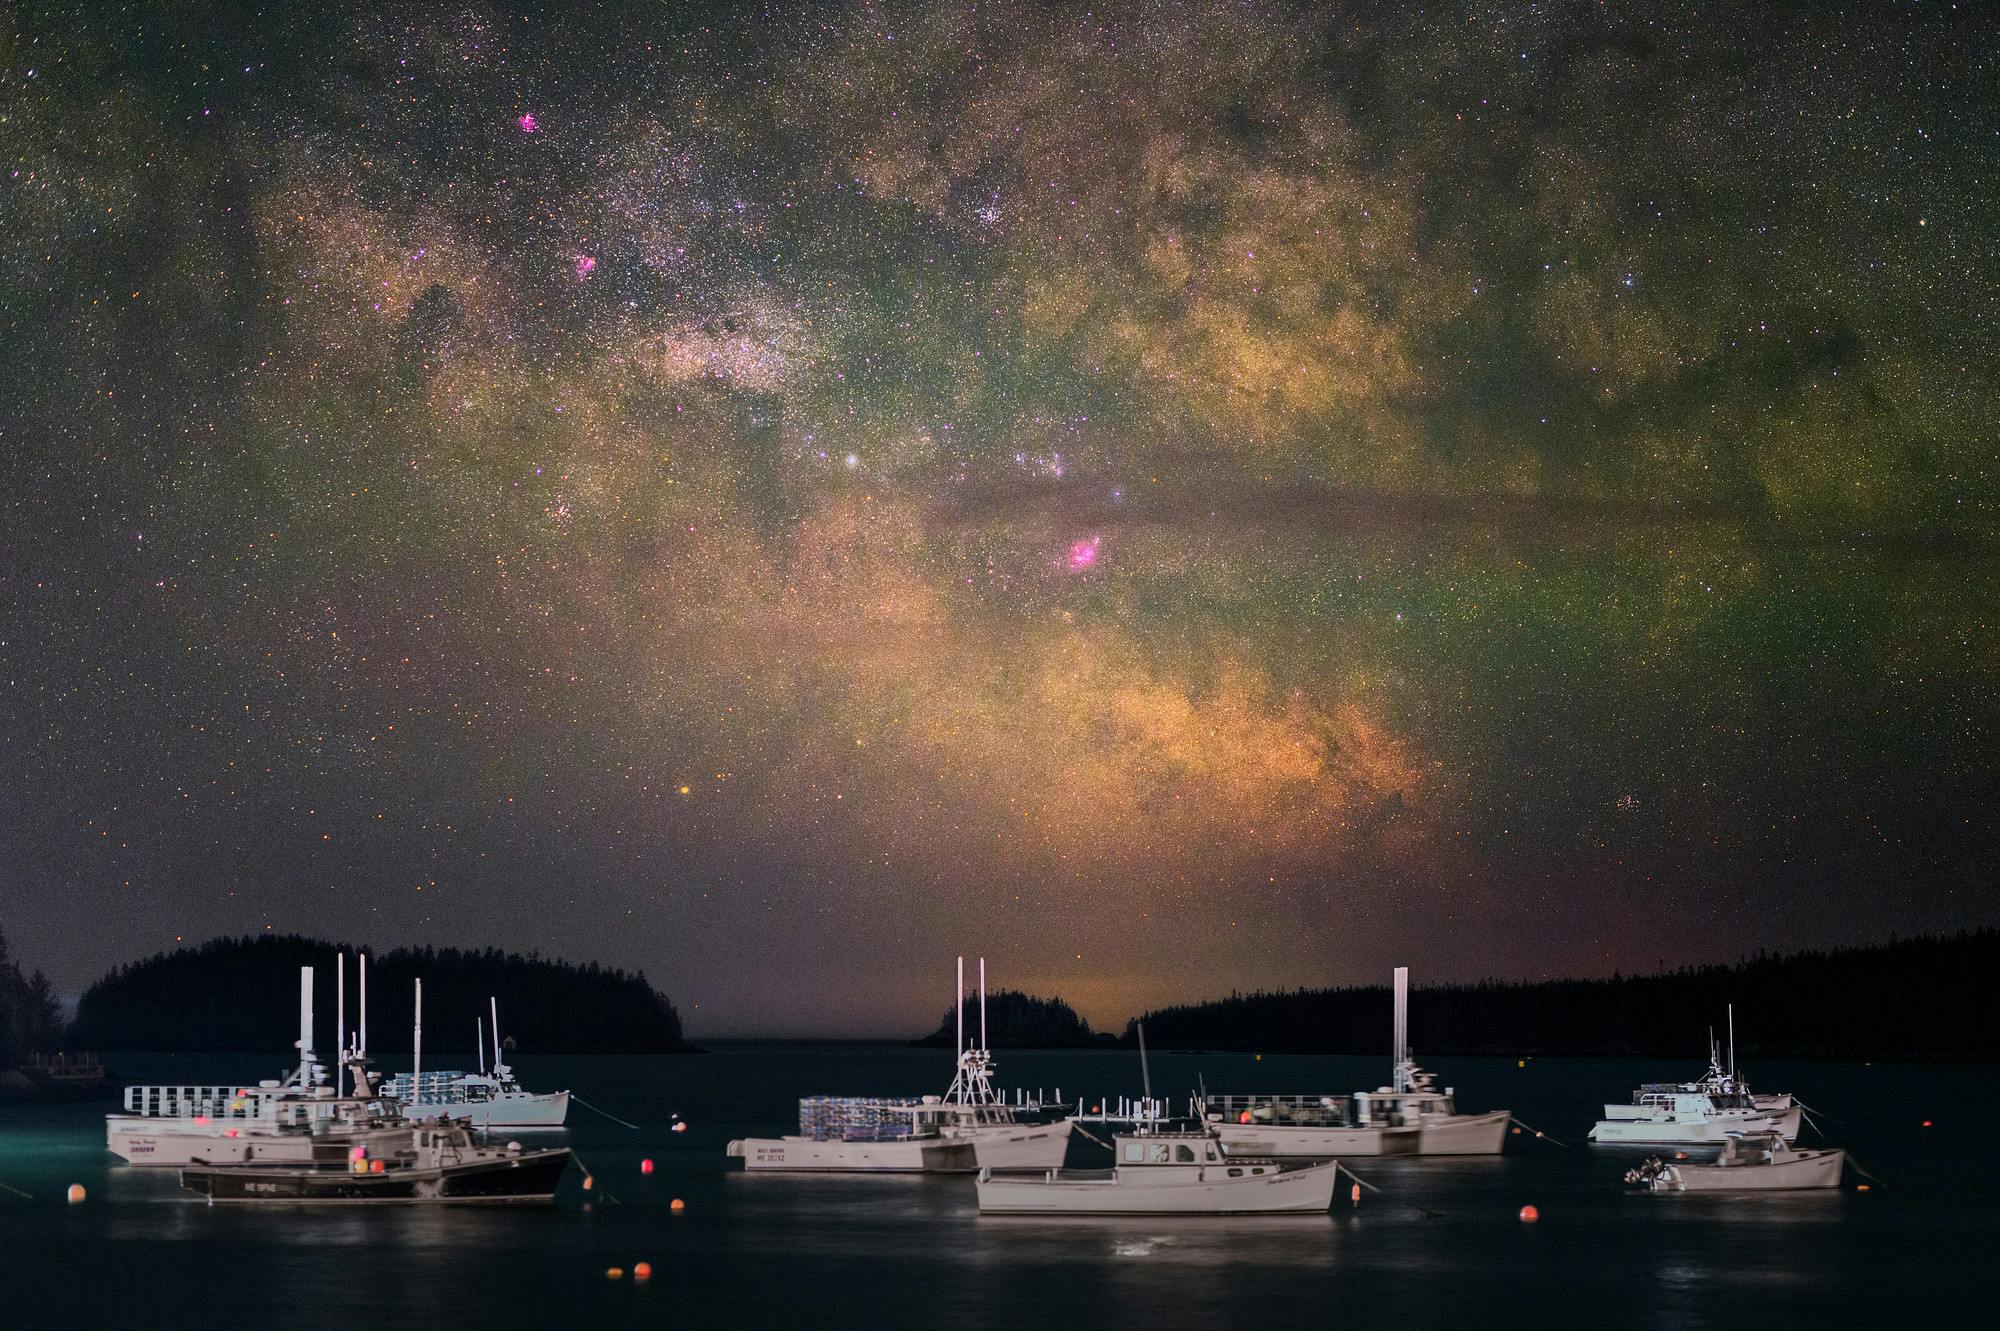 Milky Way Over Lobster Boats In Cutler Harbor